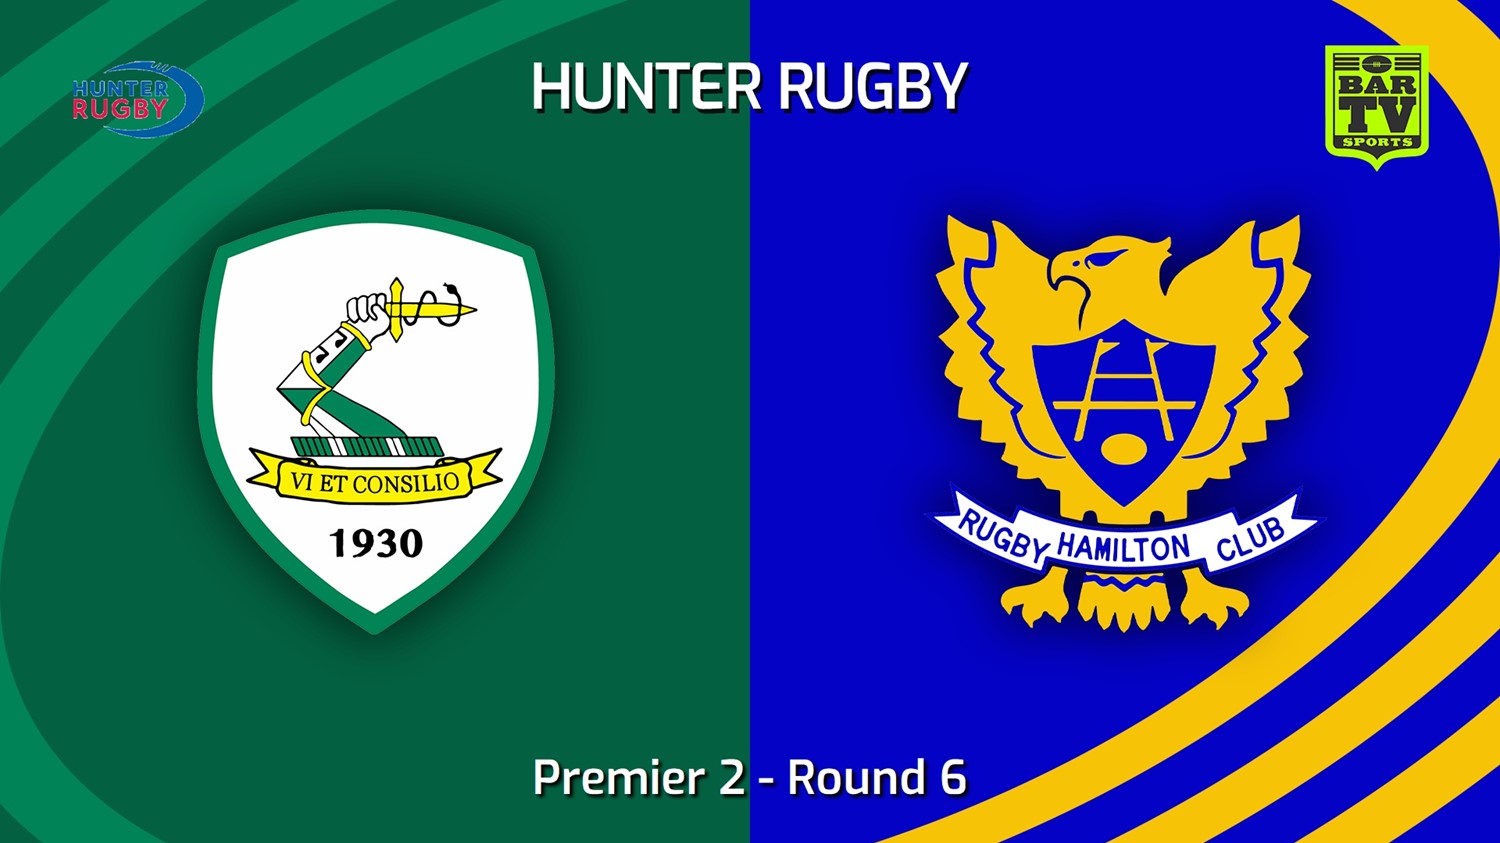 240518-video-Hunter Rugby Round 6 - Premier 2 - Merewether Carlton v Hamilton Hawks Slate Image